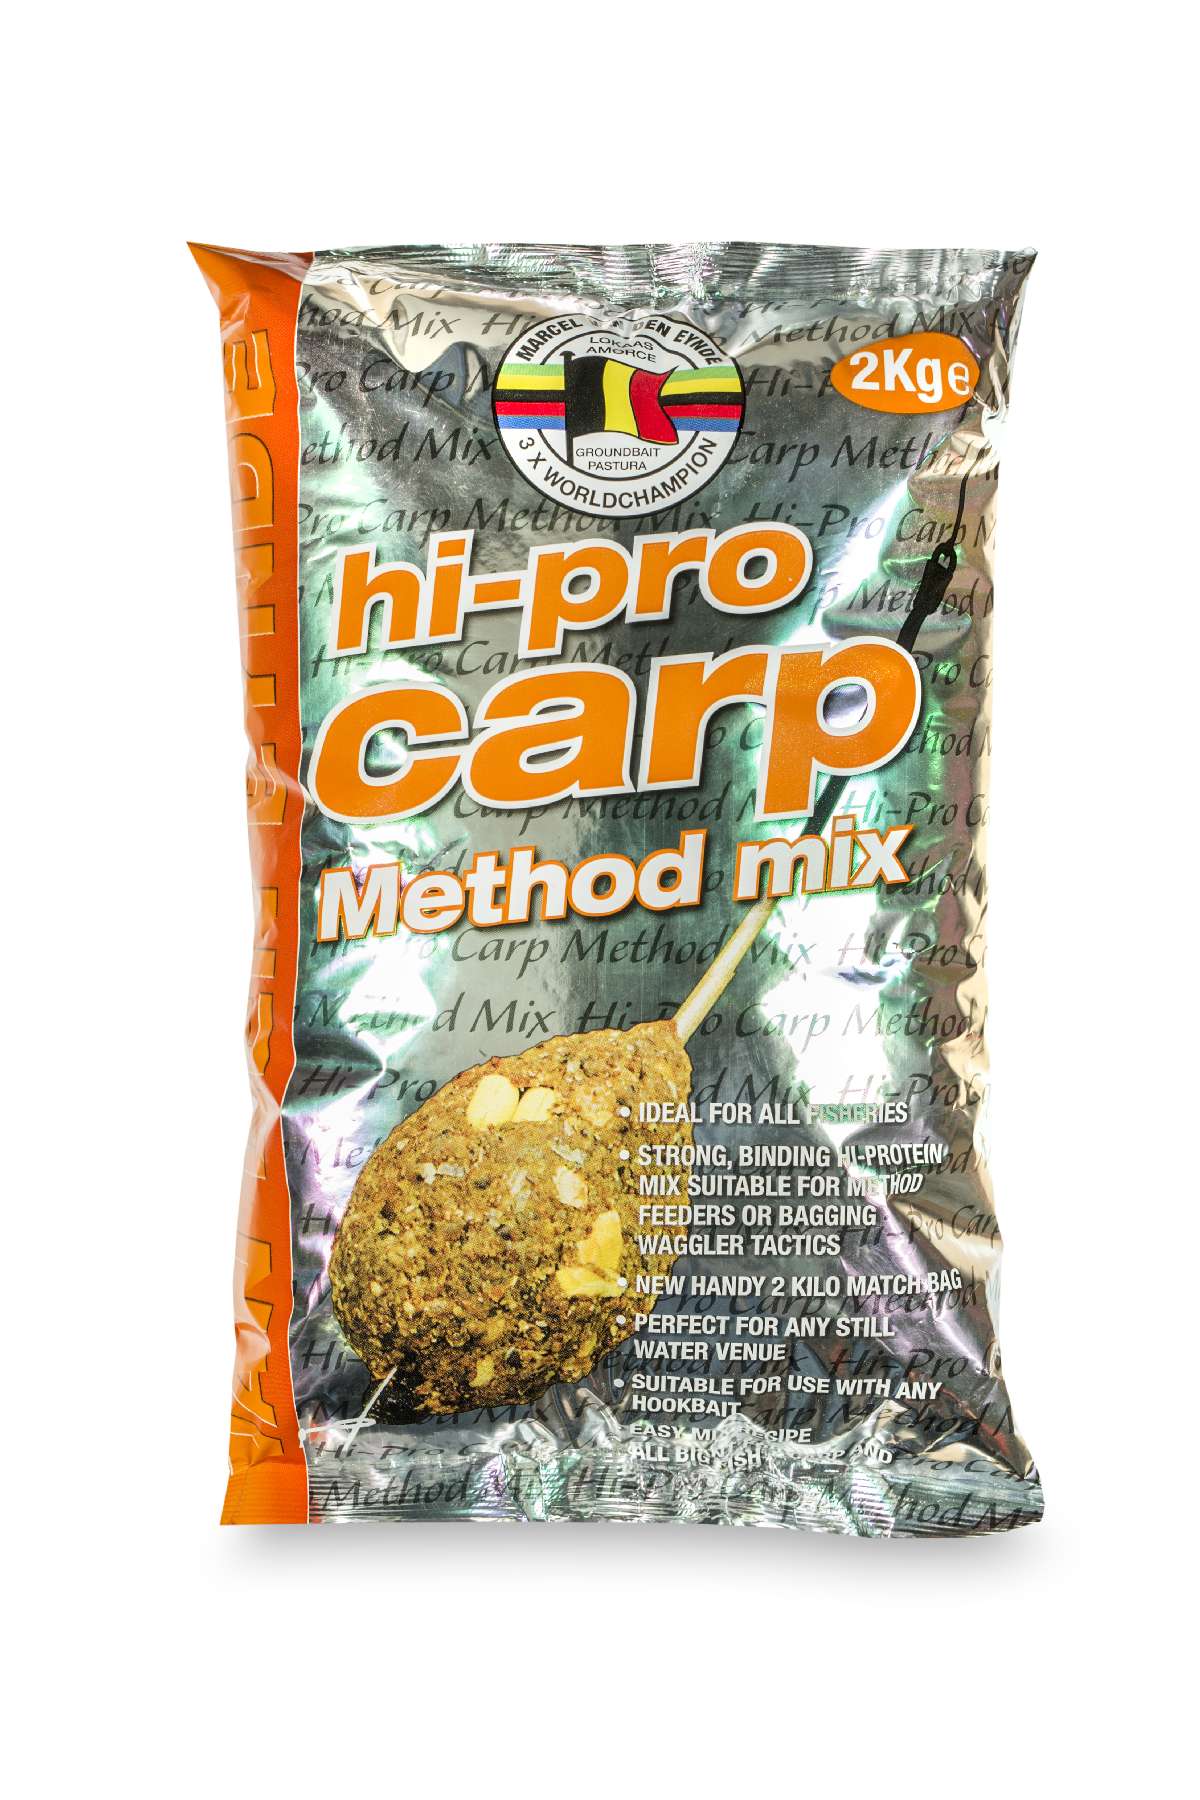 Stapelkorting vd Eynde Hi Pro Carp Method Mix 6x2 kg